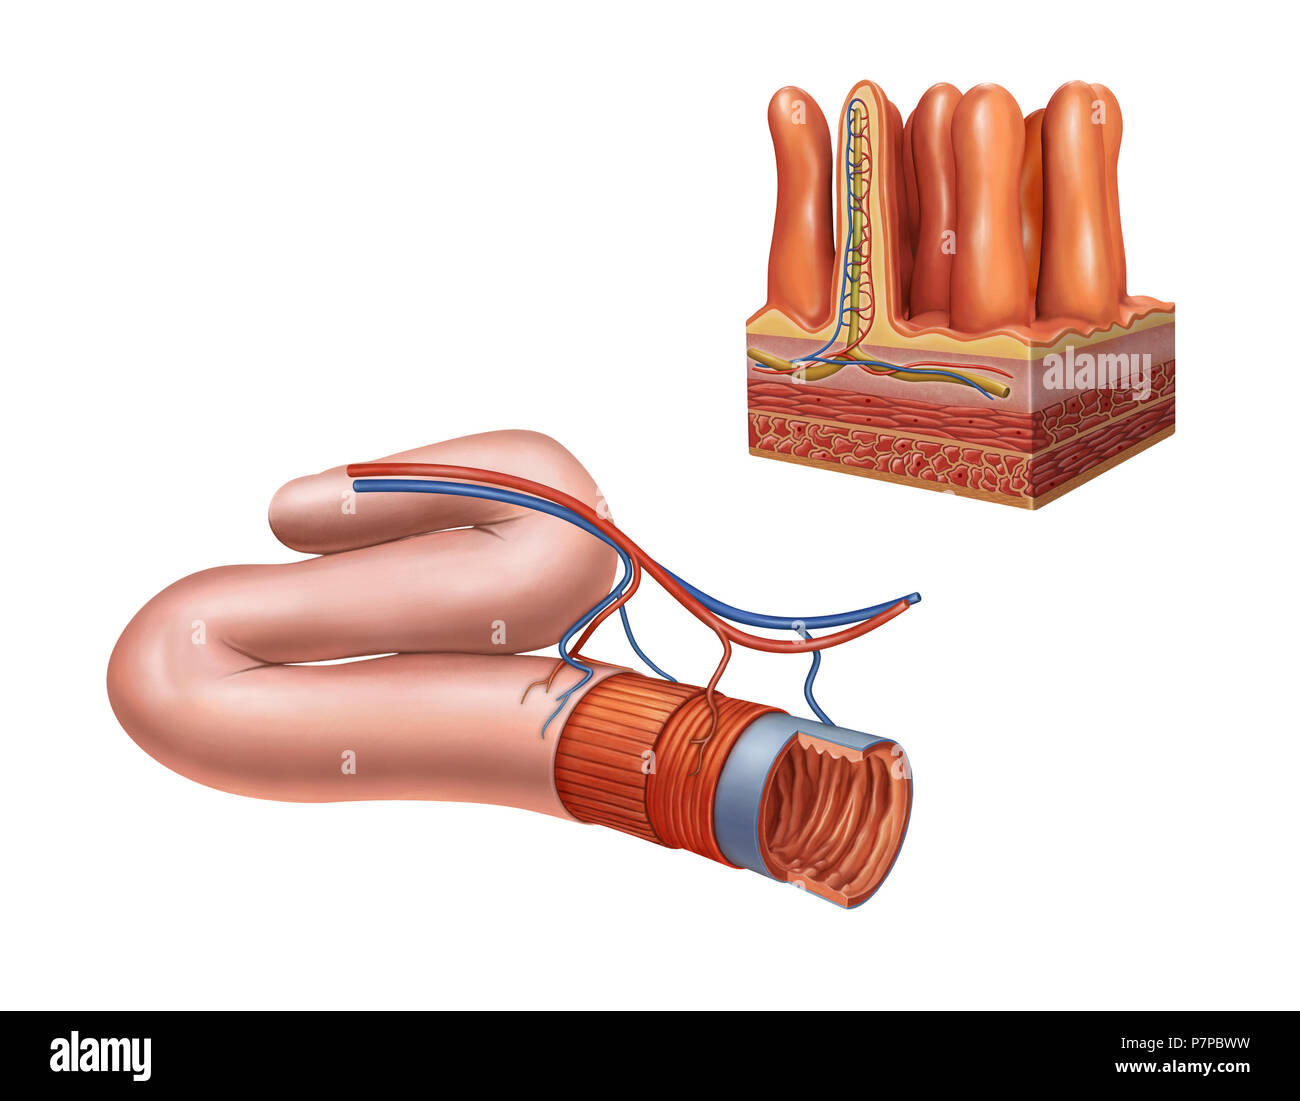 Small intestine anatomy. Digital illustration. Stock Photo